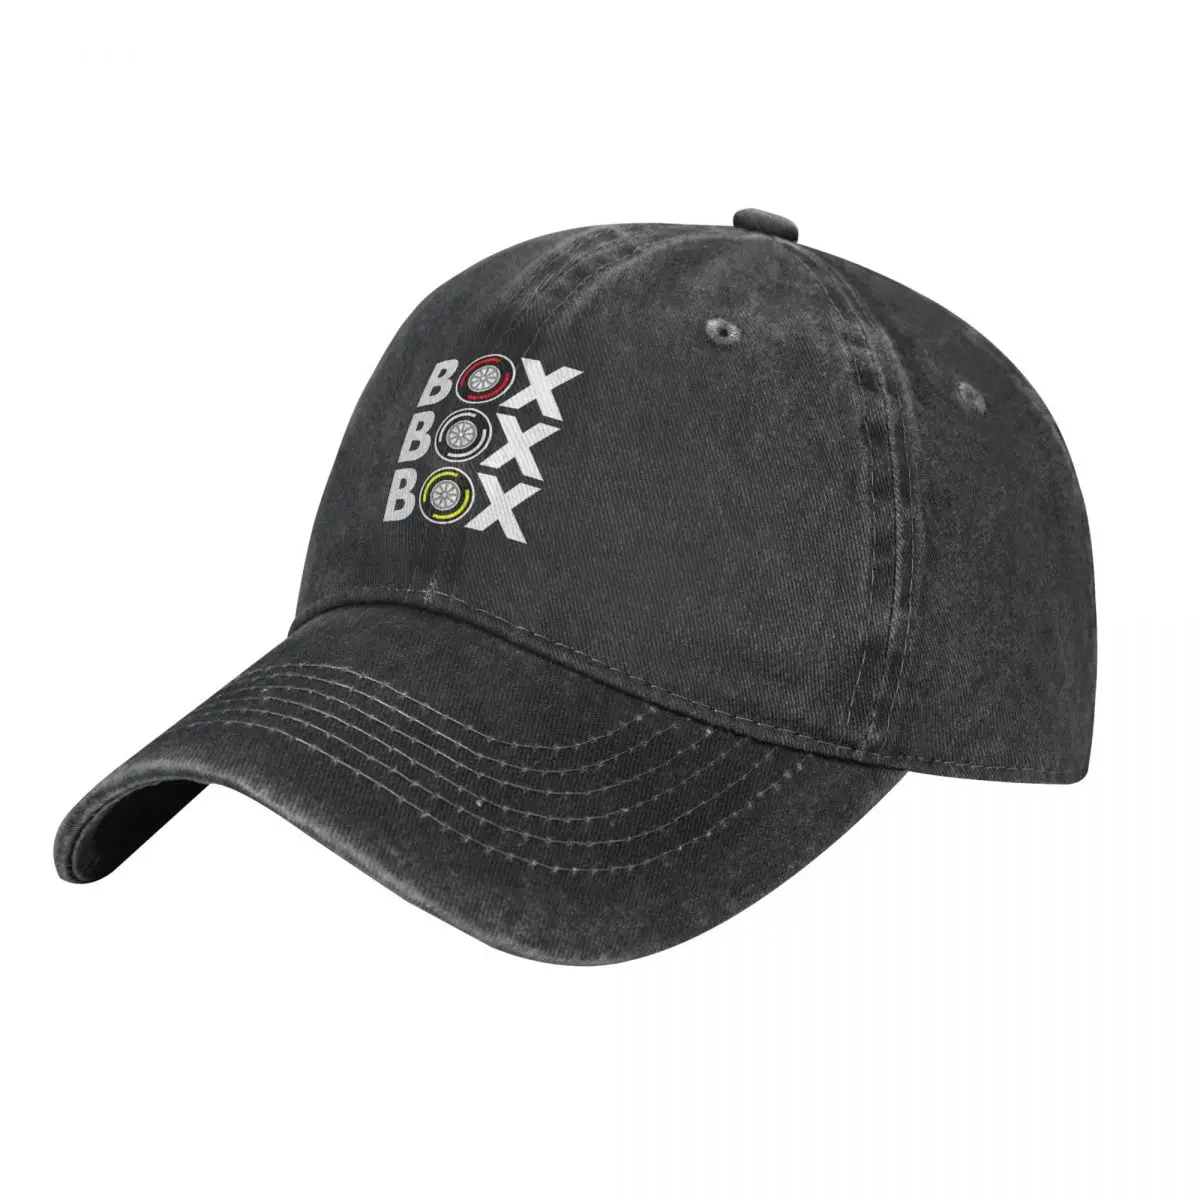 

Box Box Box F1 Tyre Compound White Text Design Cowboy Hat black party Hat Ball Cap summer hat Golf Women Men's